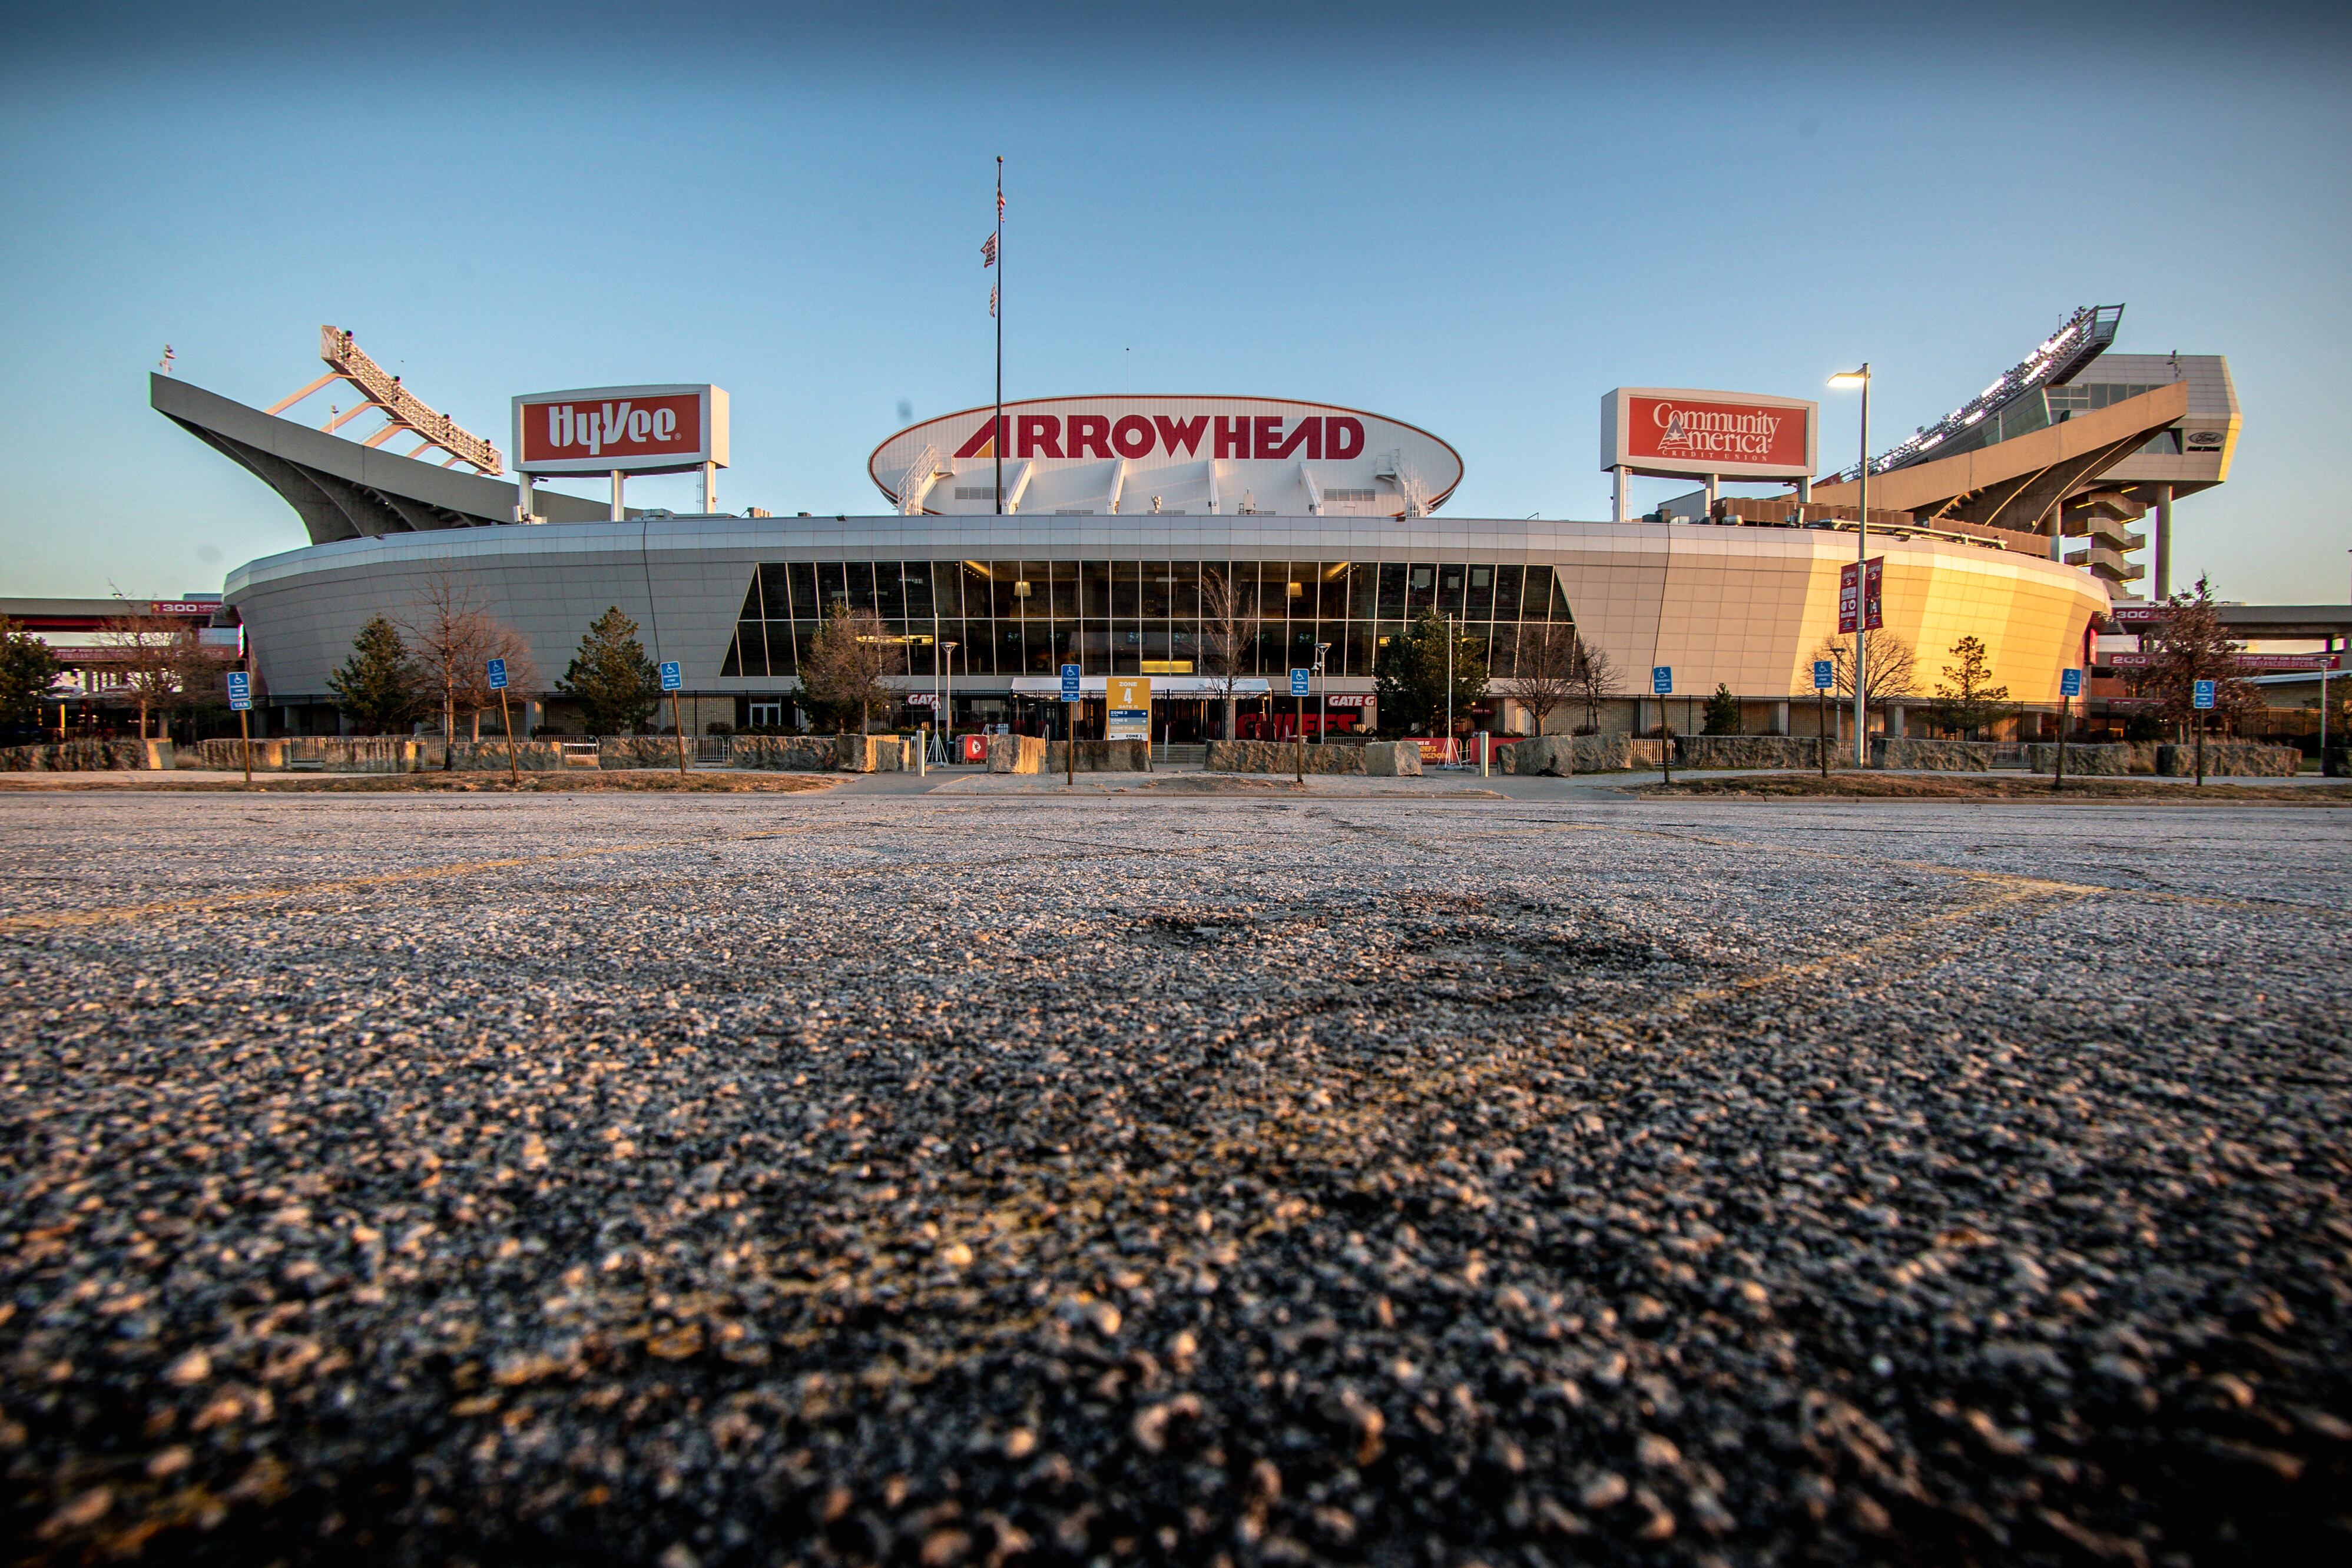 The exterior of Arrowhead Stadium in Kansas City, Missouri.